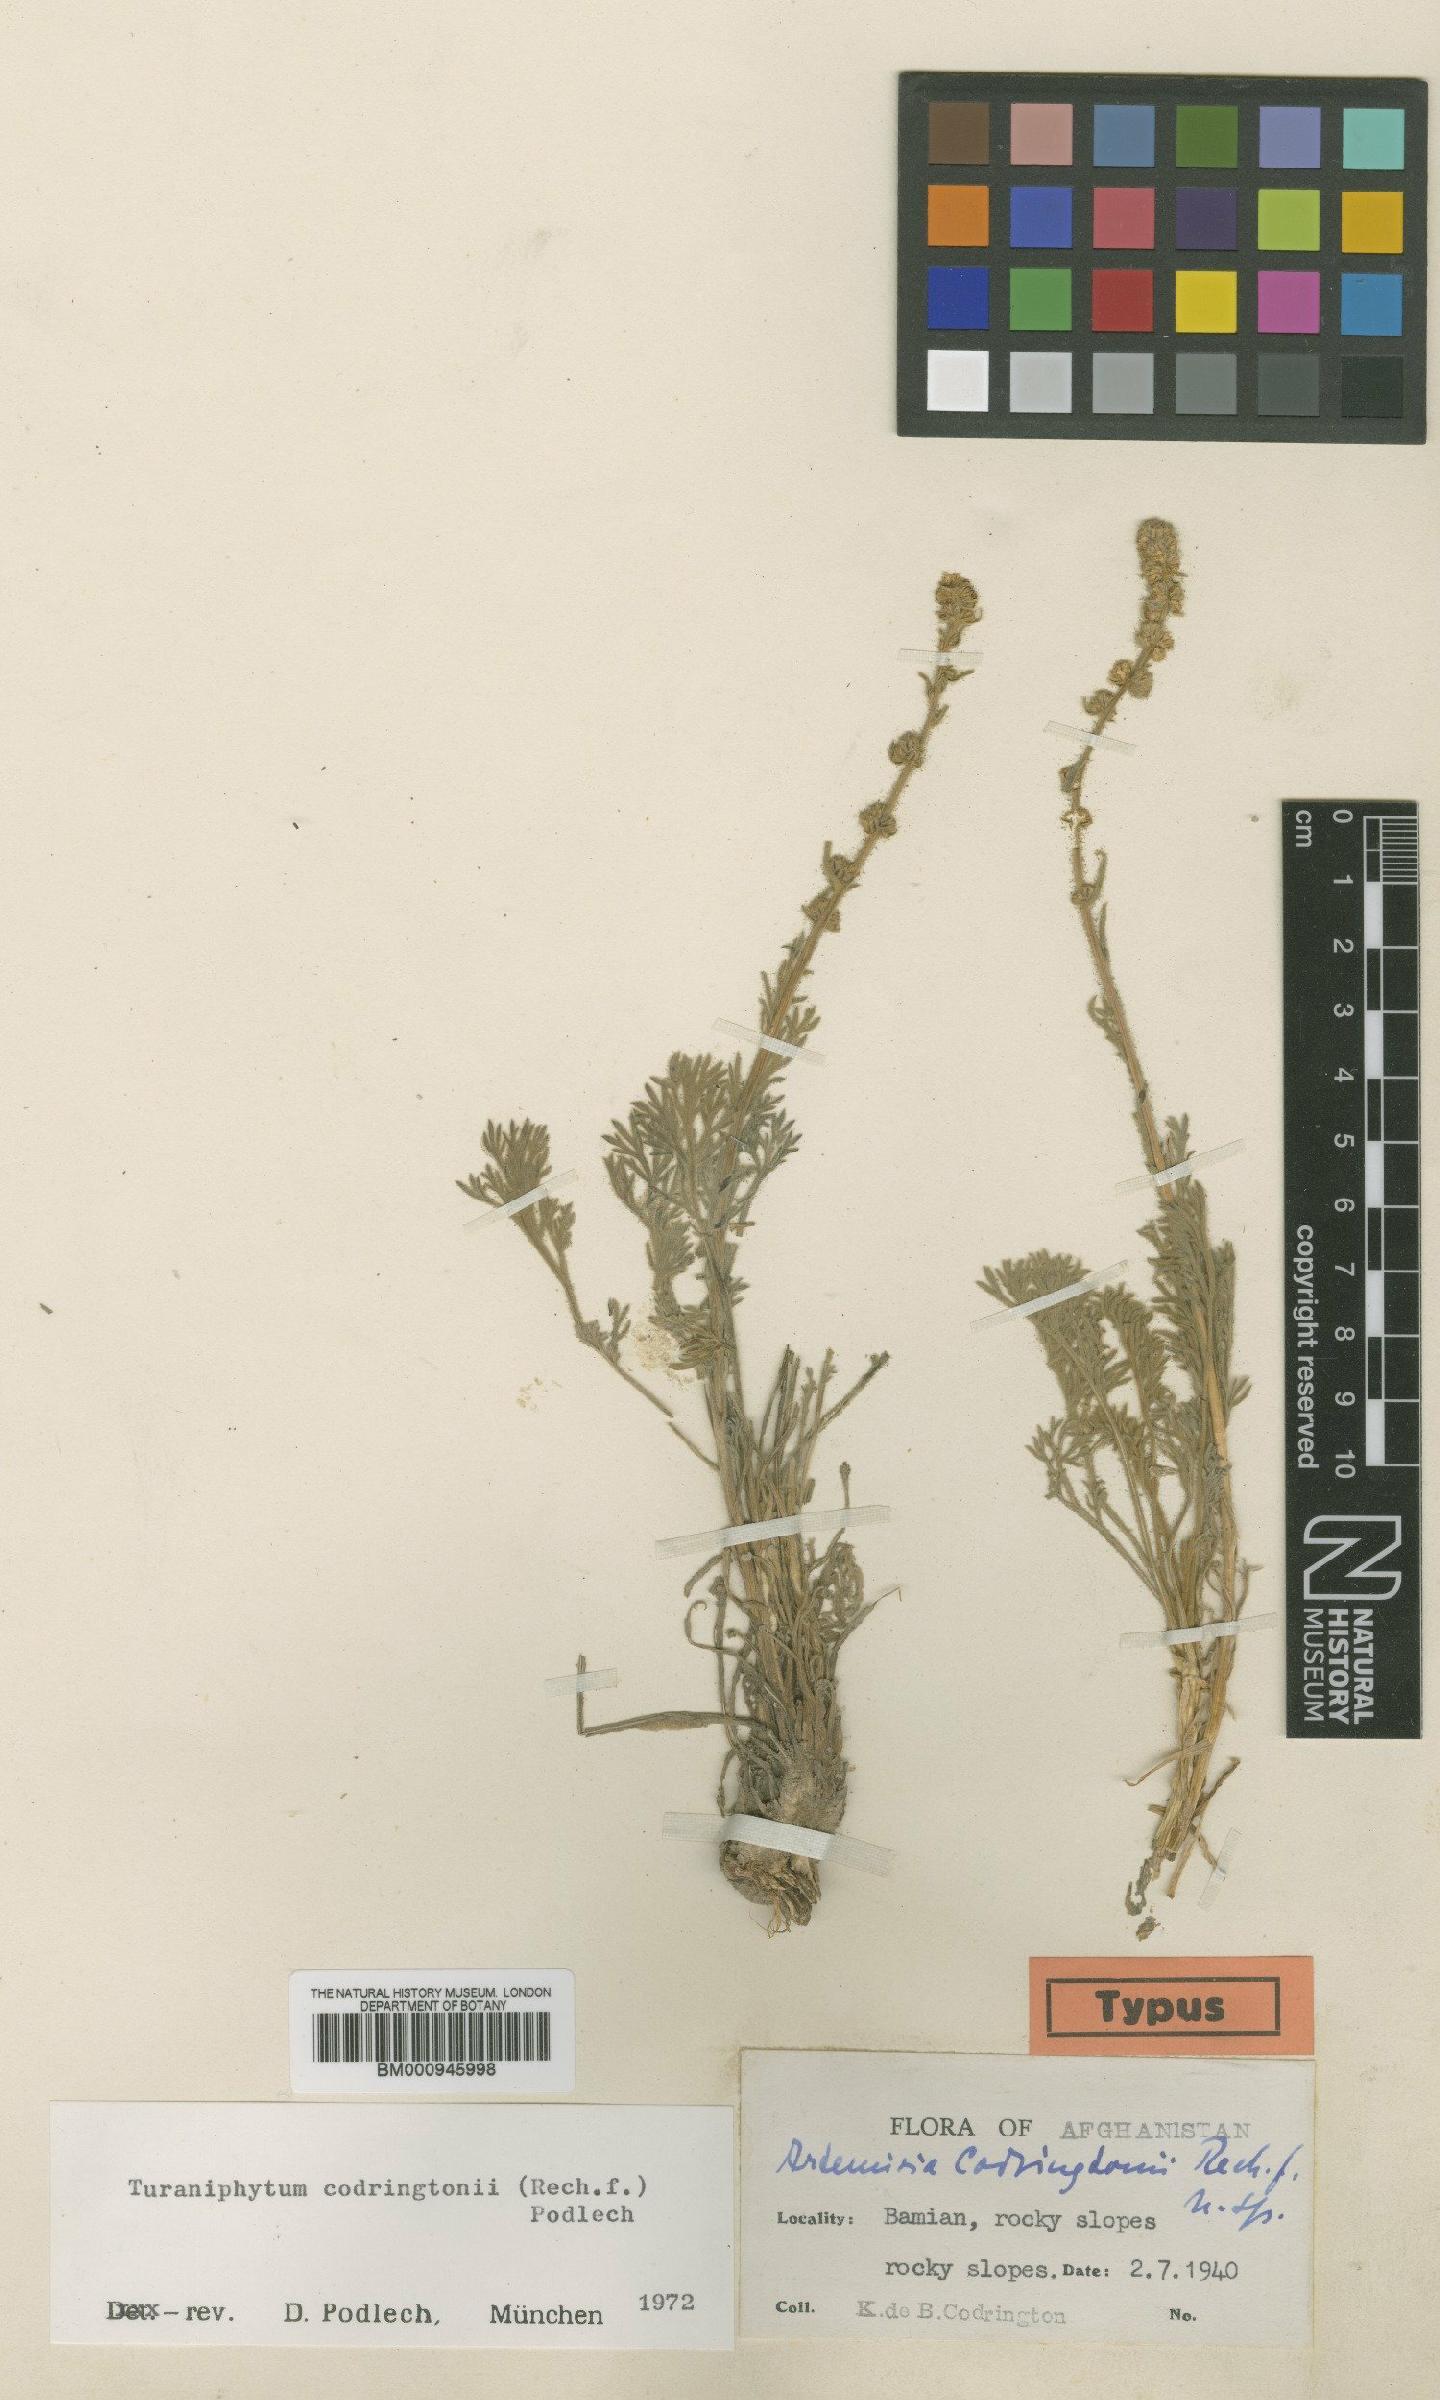 To NHMUK collection (Turaniphytum codringtonii (Rech.f.) Podlech; Type; NHMUK:ecatalogue:474358)